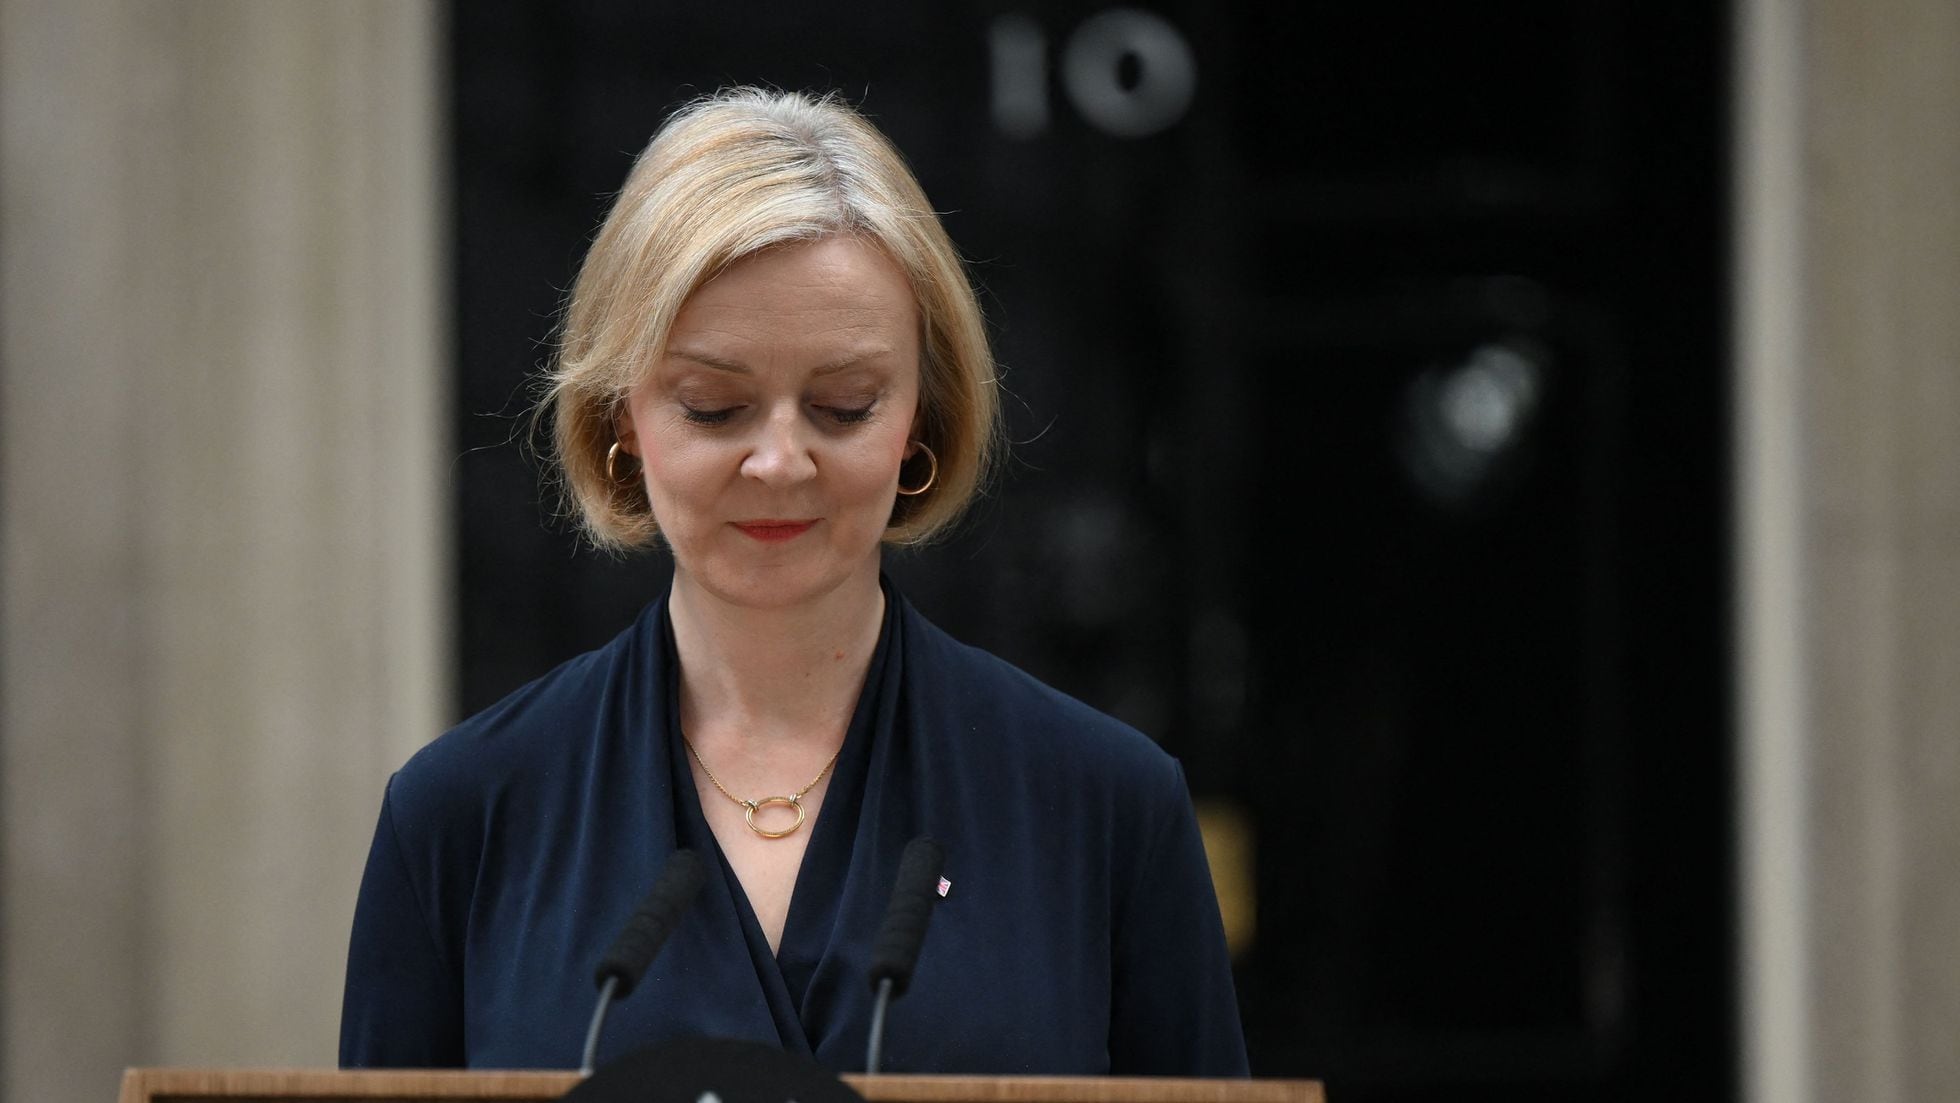 Liz Truss resigns as British PM after 45 days | International | EL PAÍS English Edition